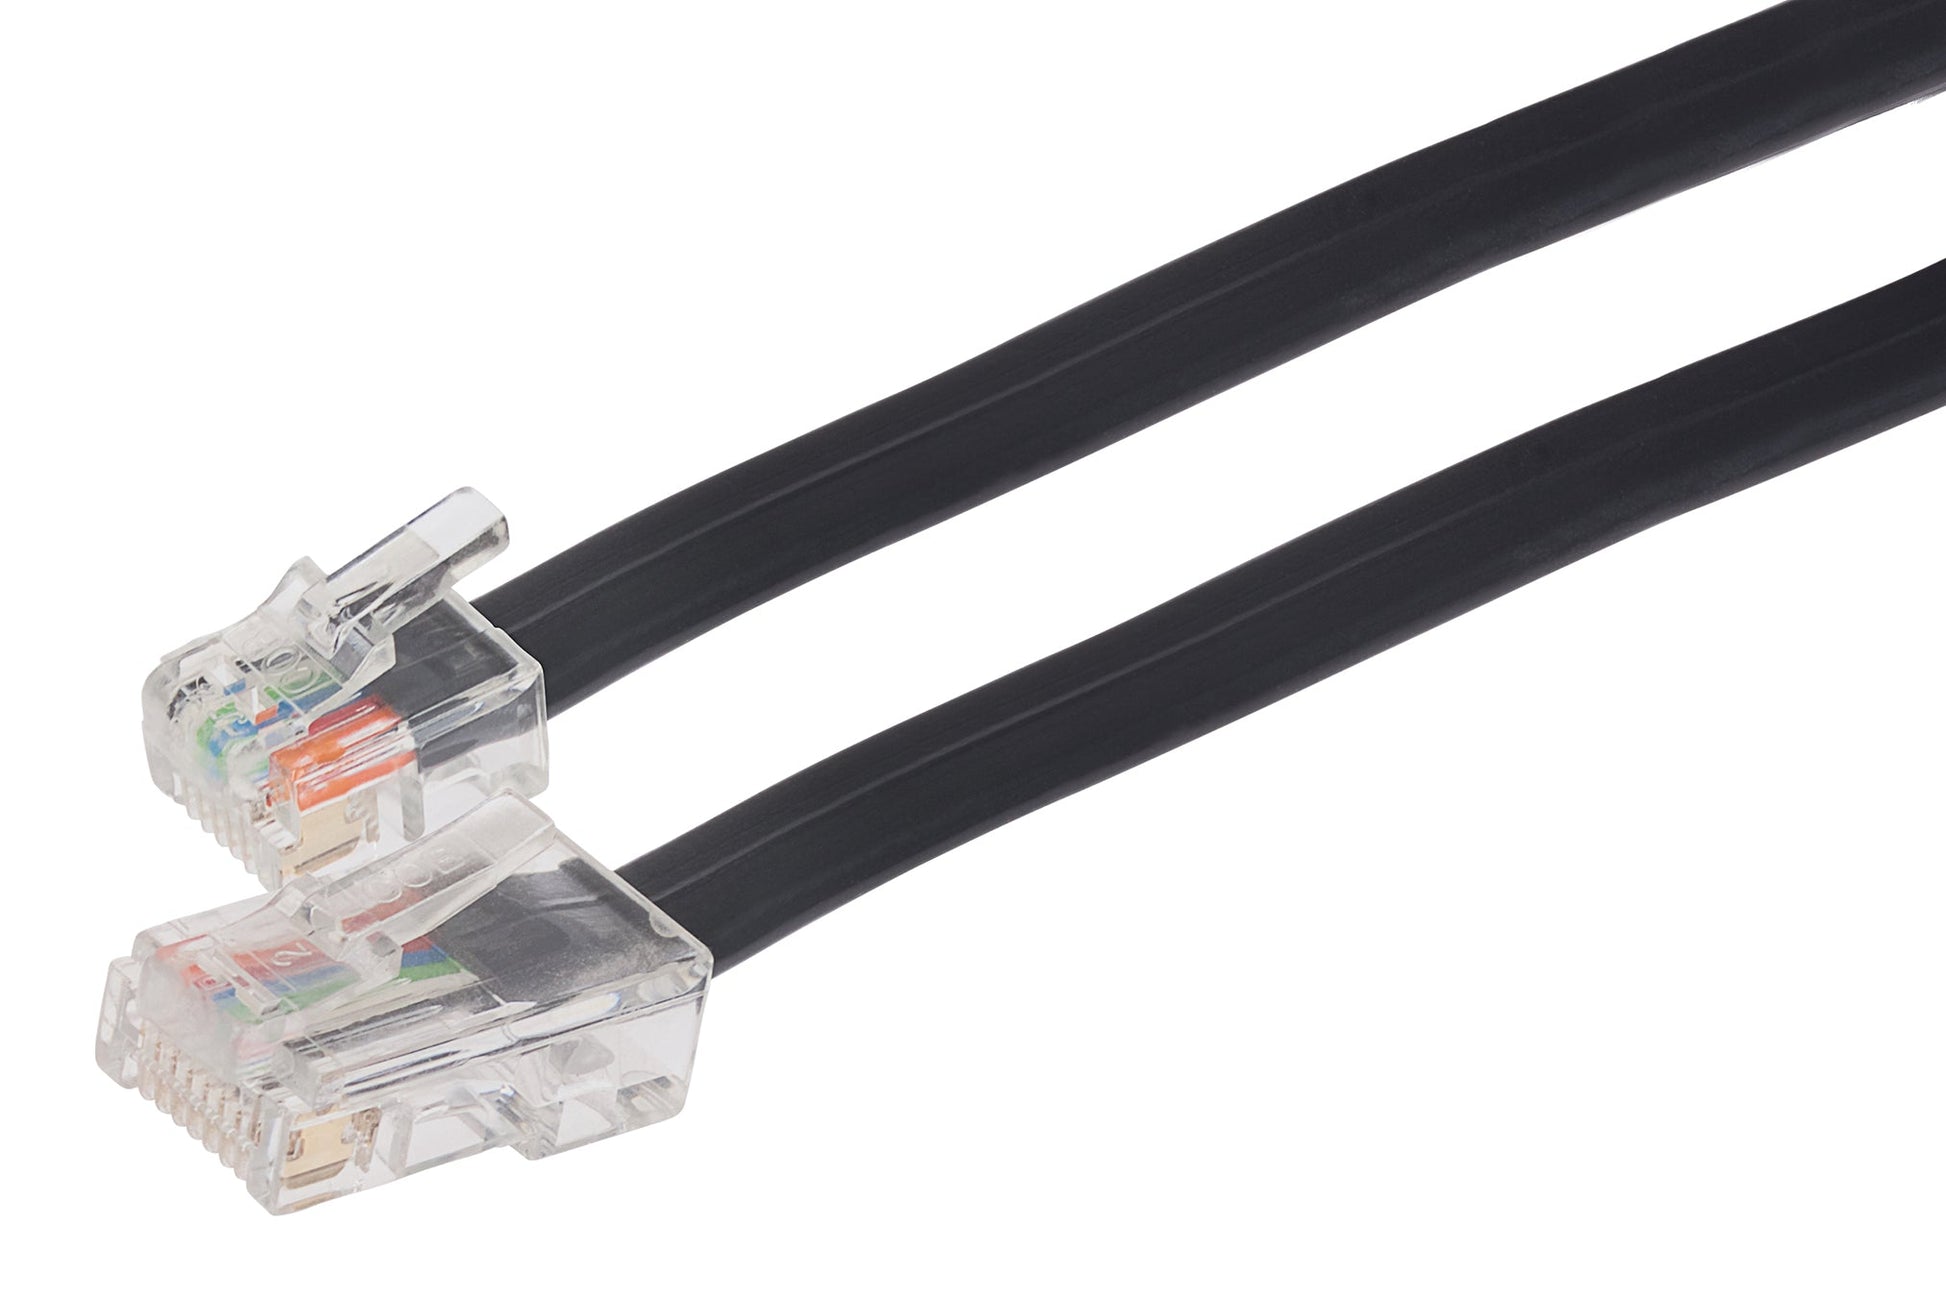 Buy ADSL 5m Modem Cable, Computer cables